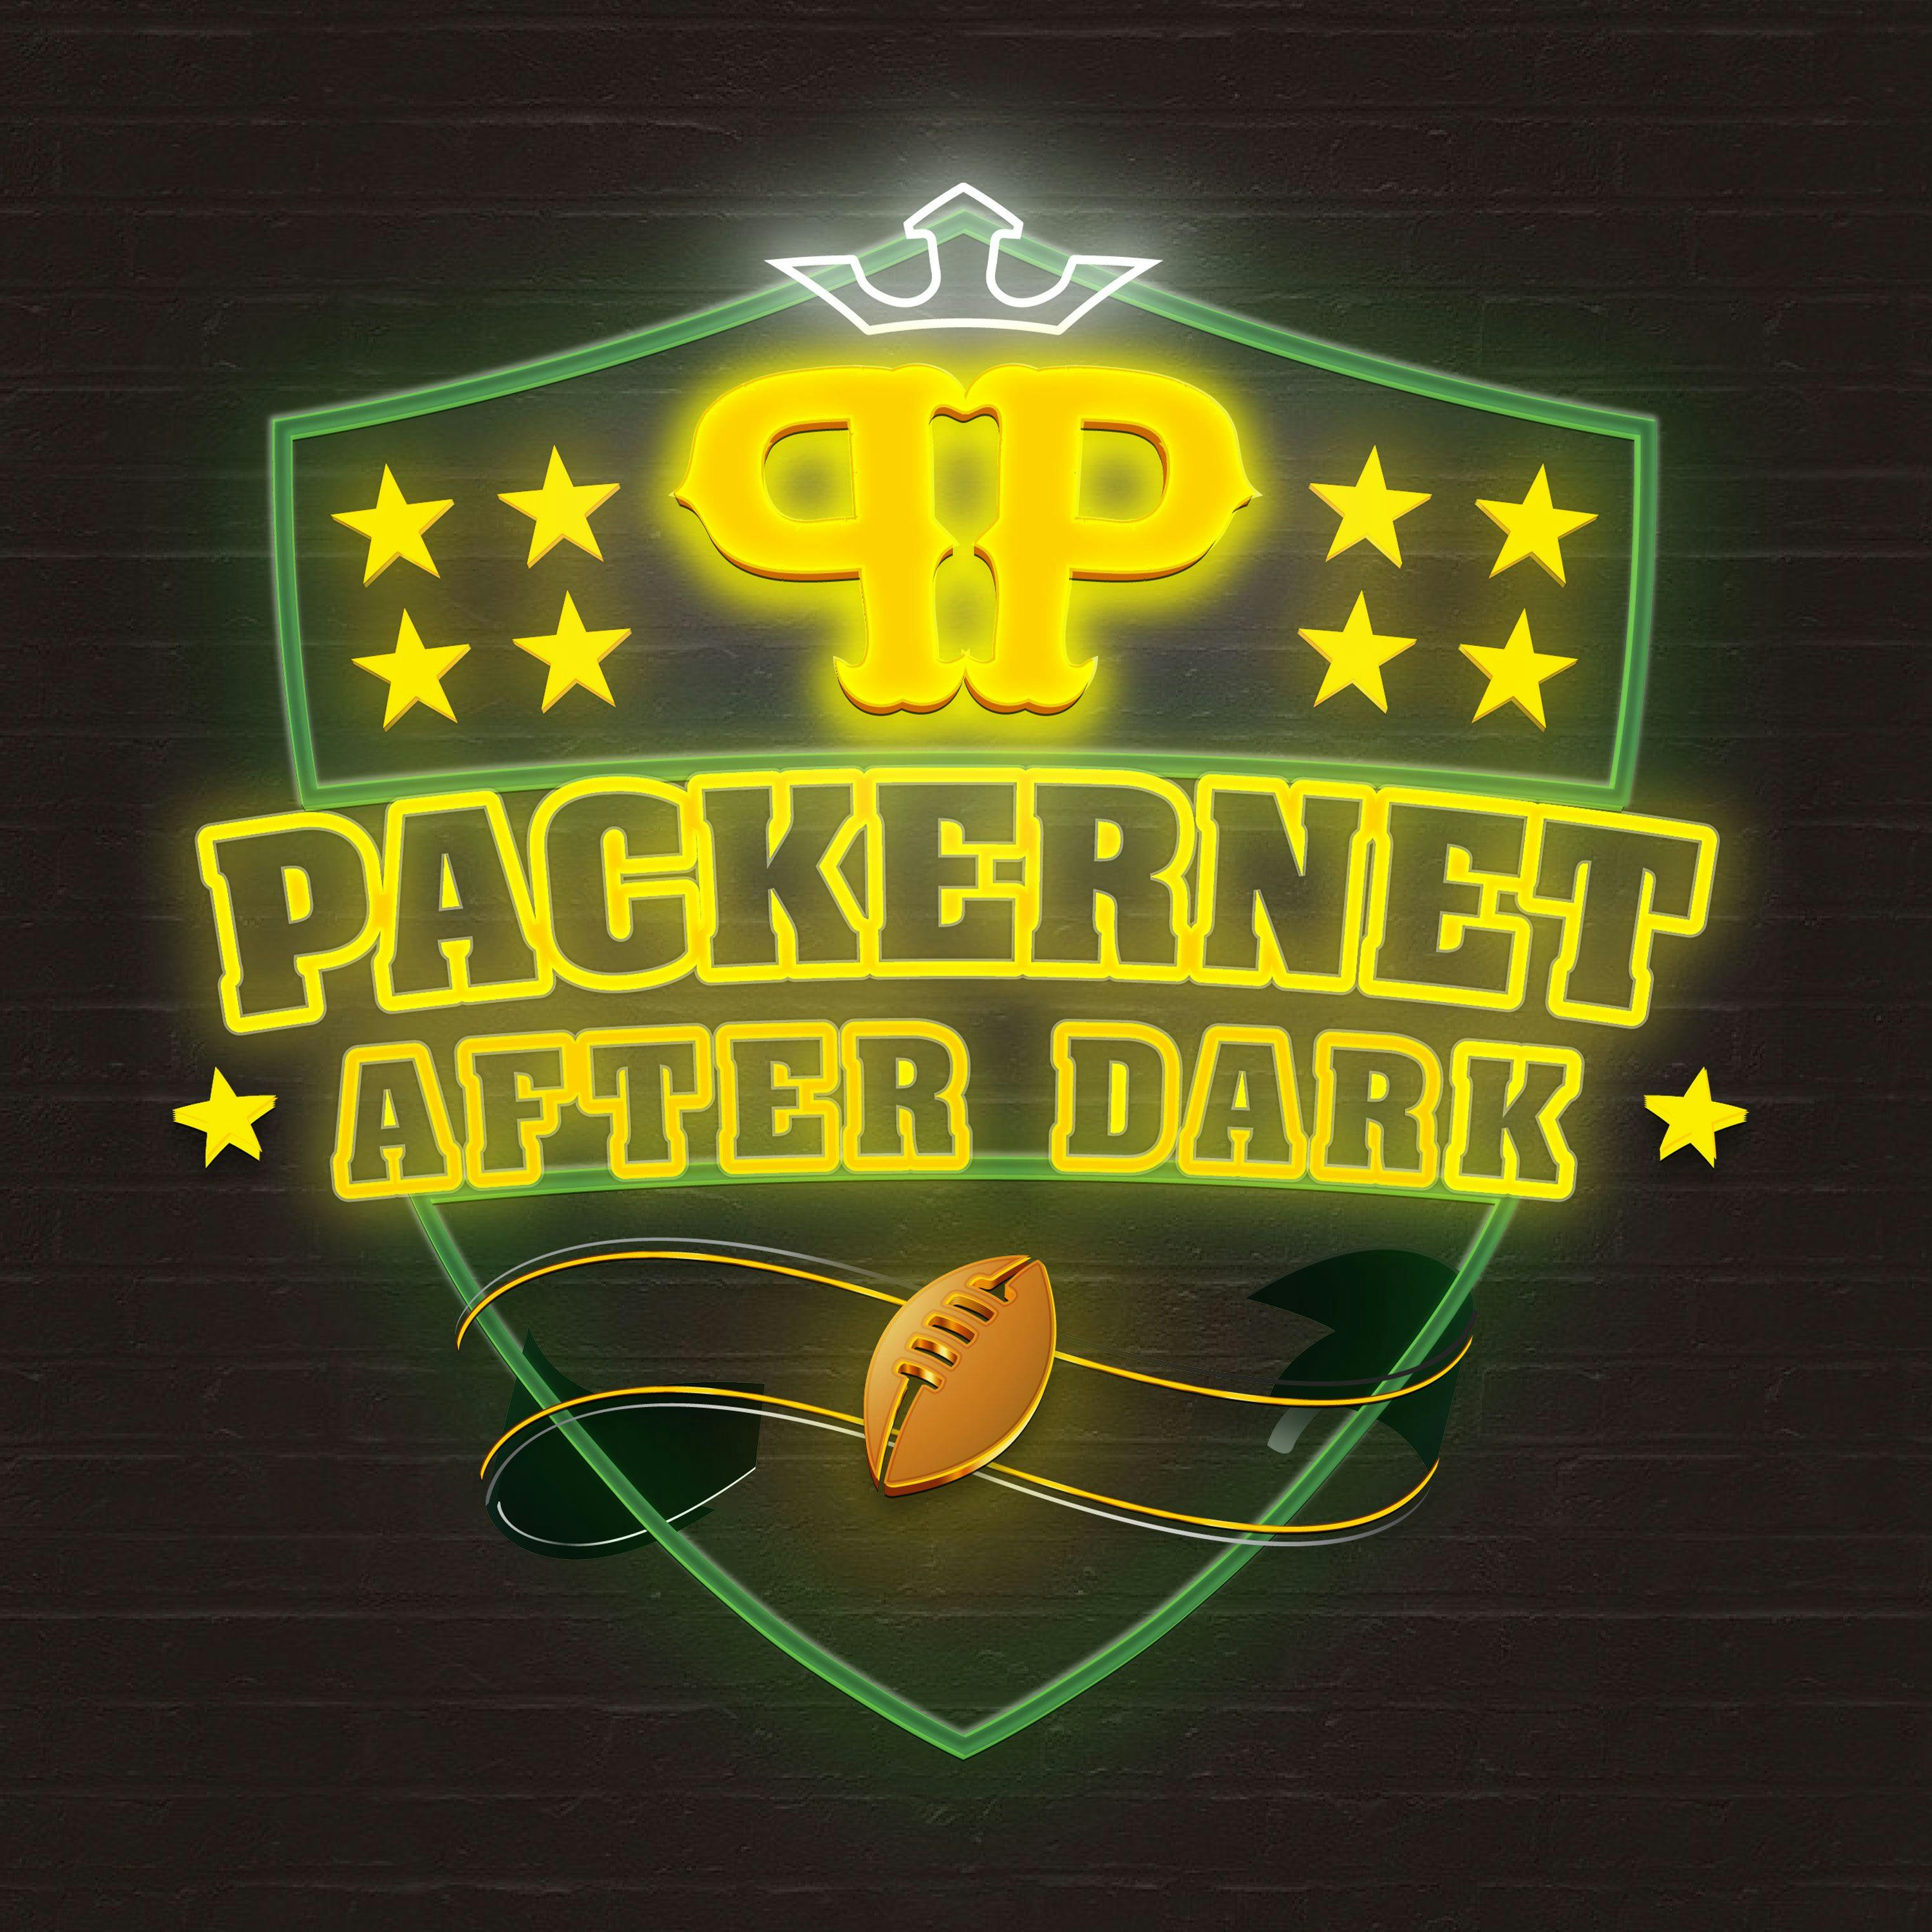 Packernet After Dark: Gridiron Gab from Green Bay